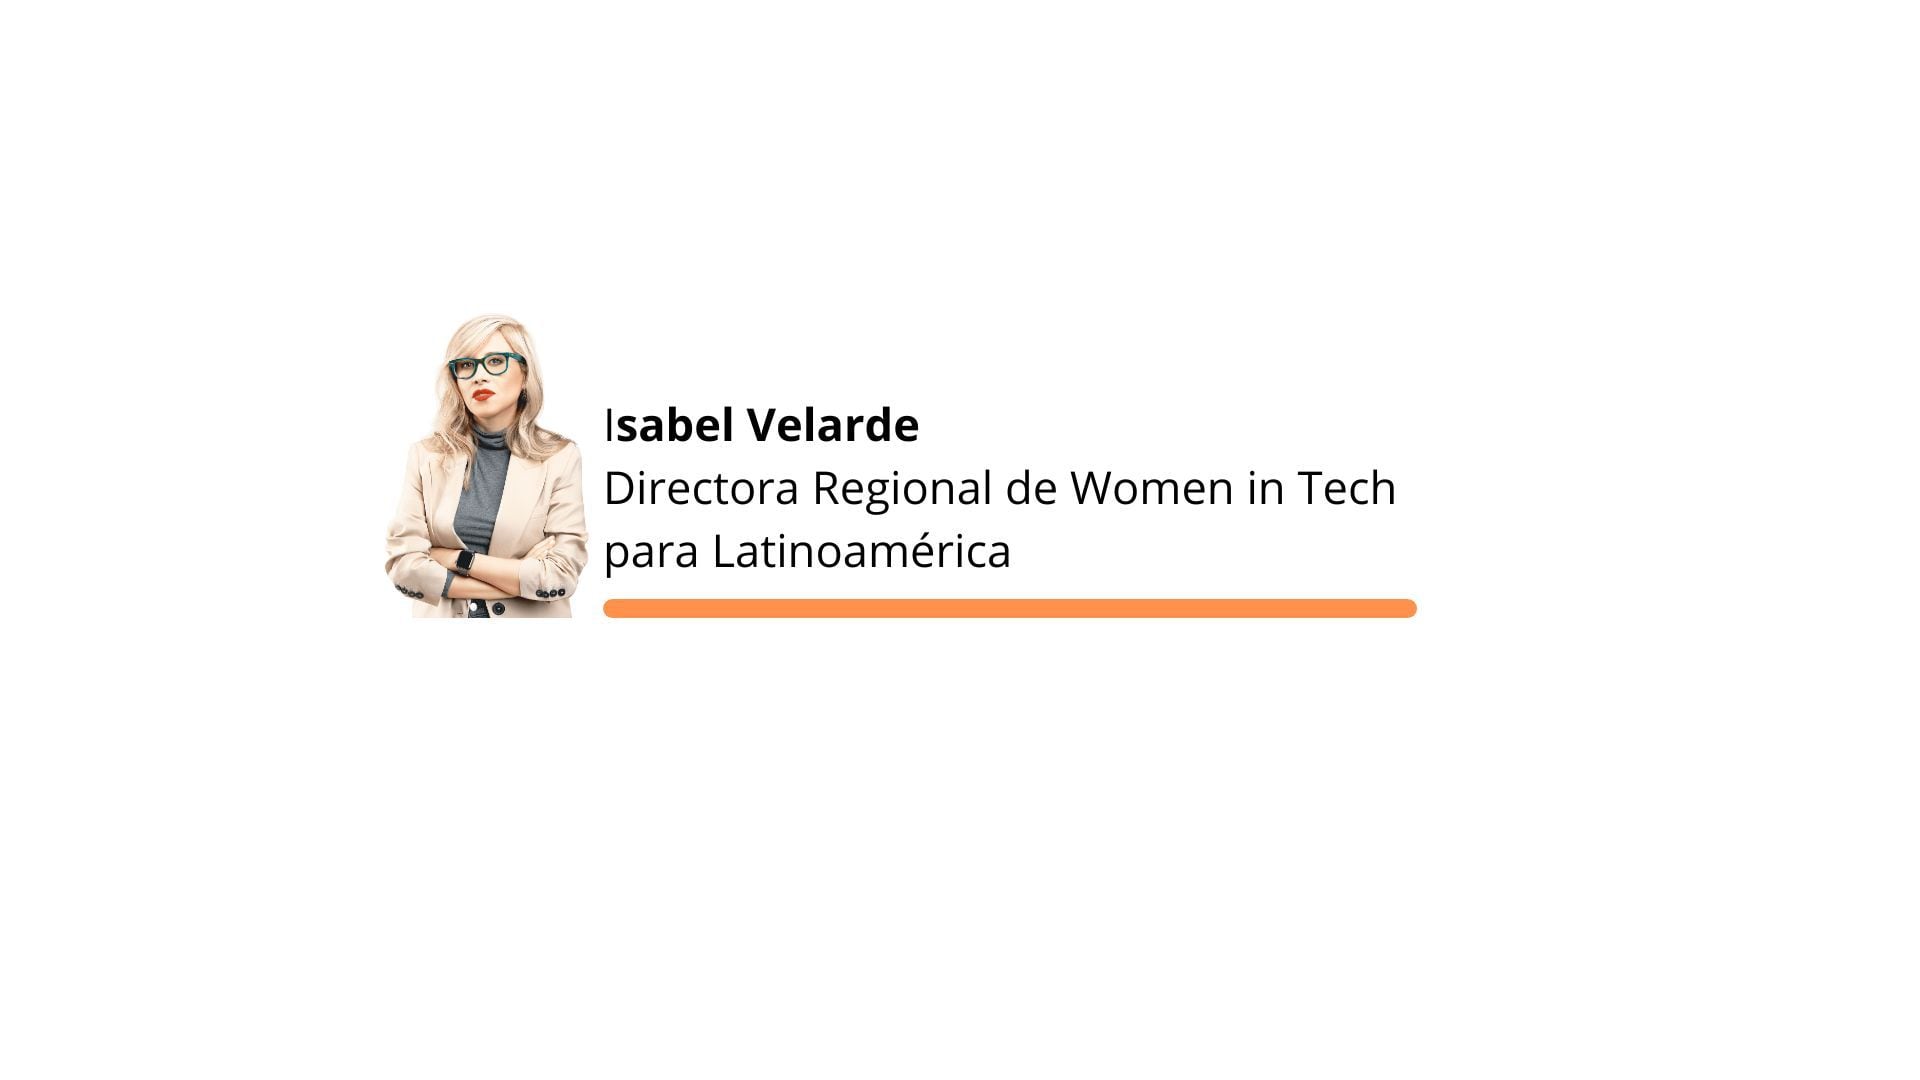 Isabel Velarde is Regional Director of Women in Technology for Latin America.